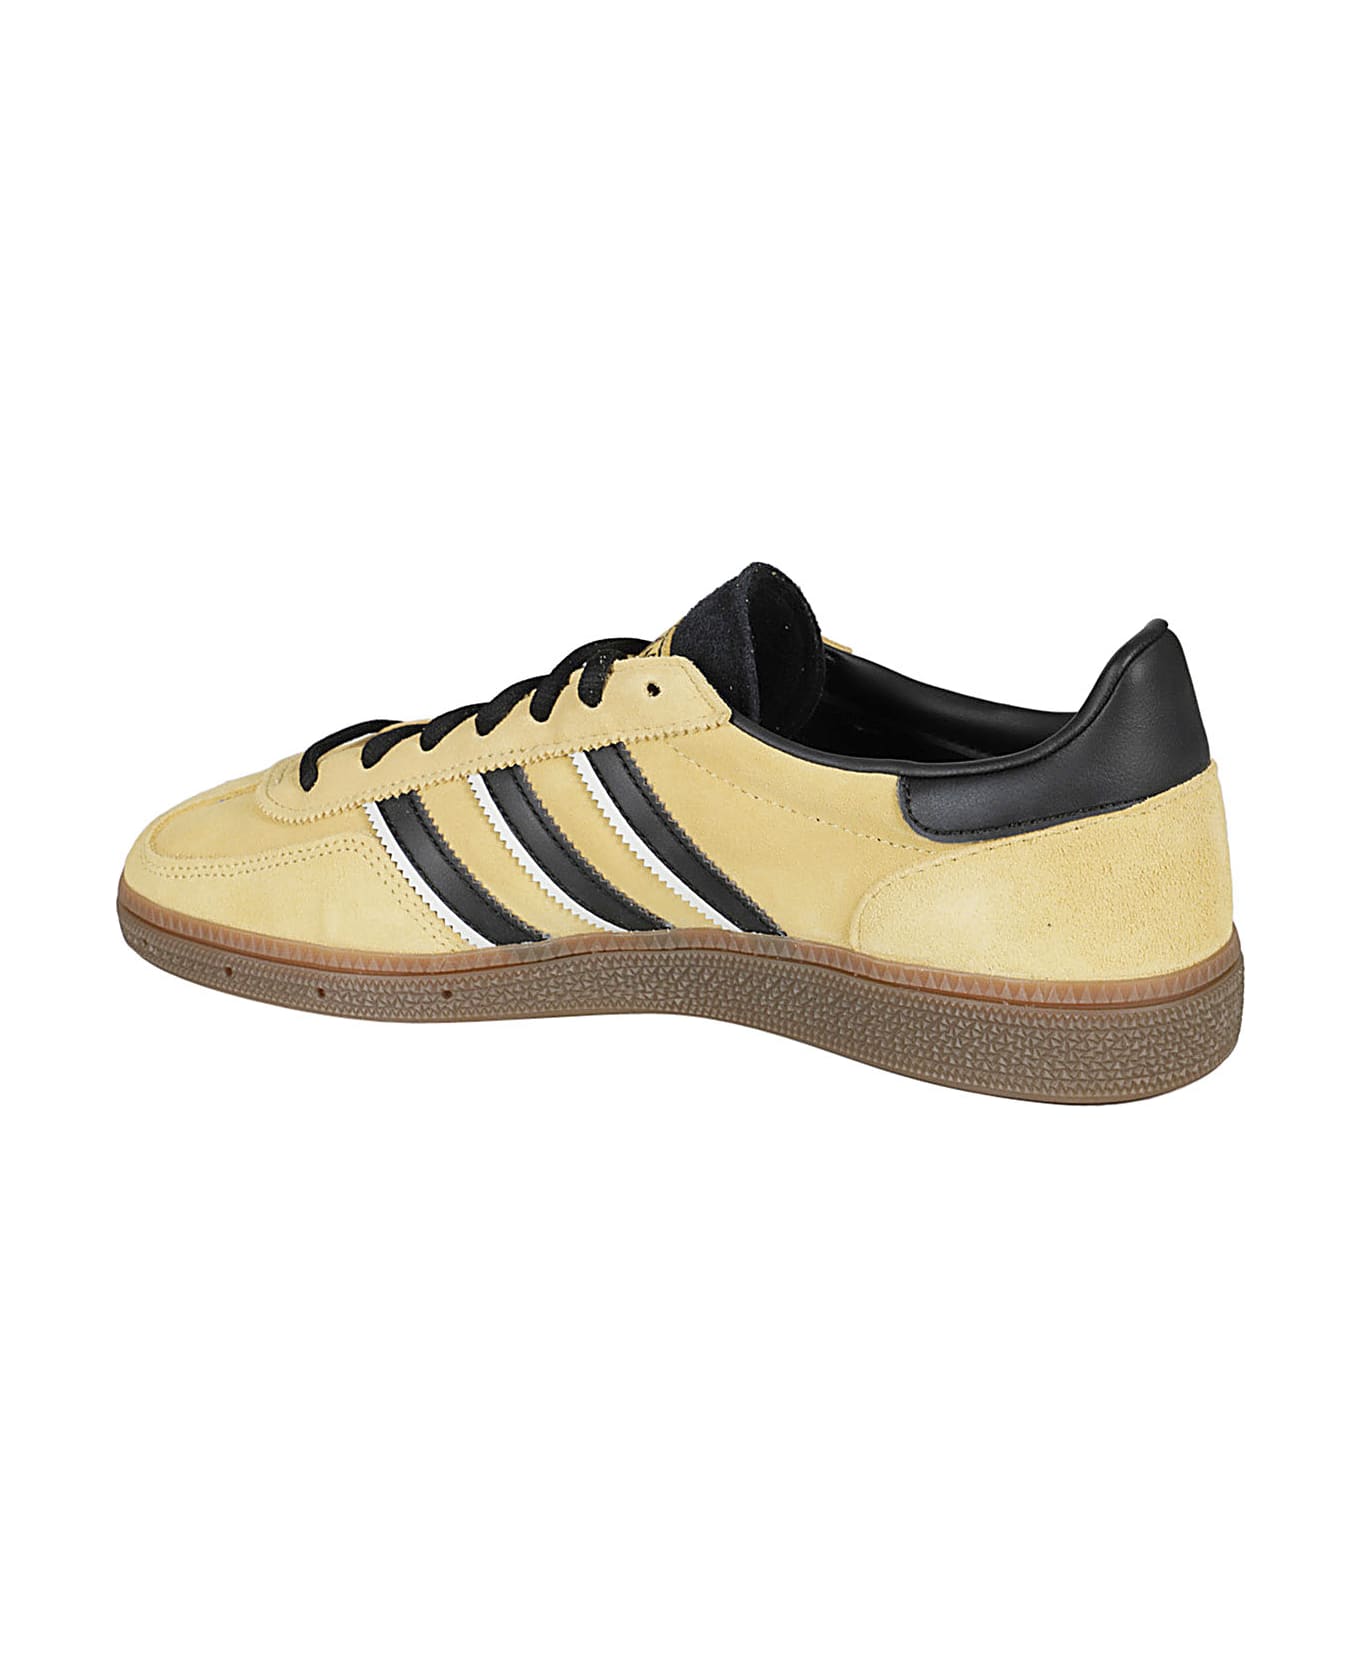 Adidas Originals Handball Spezial Sneakers - Oat/cblack/crywht